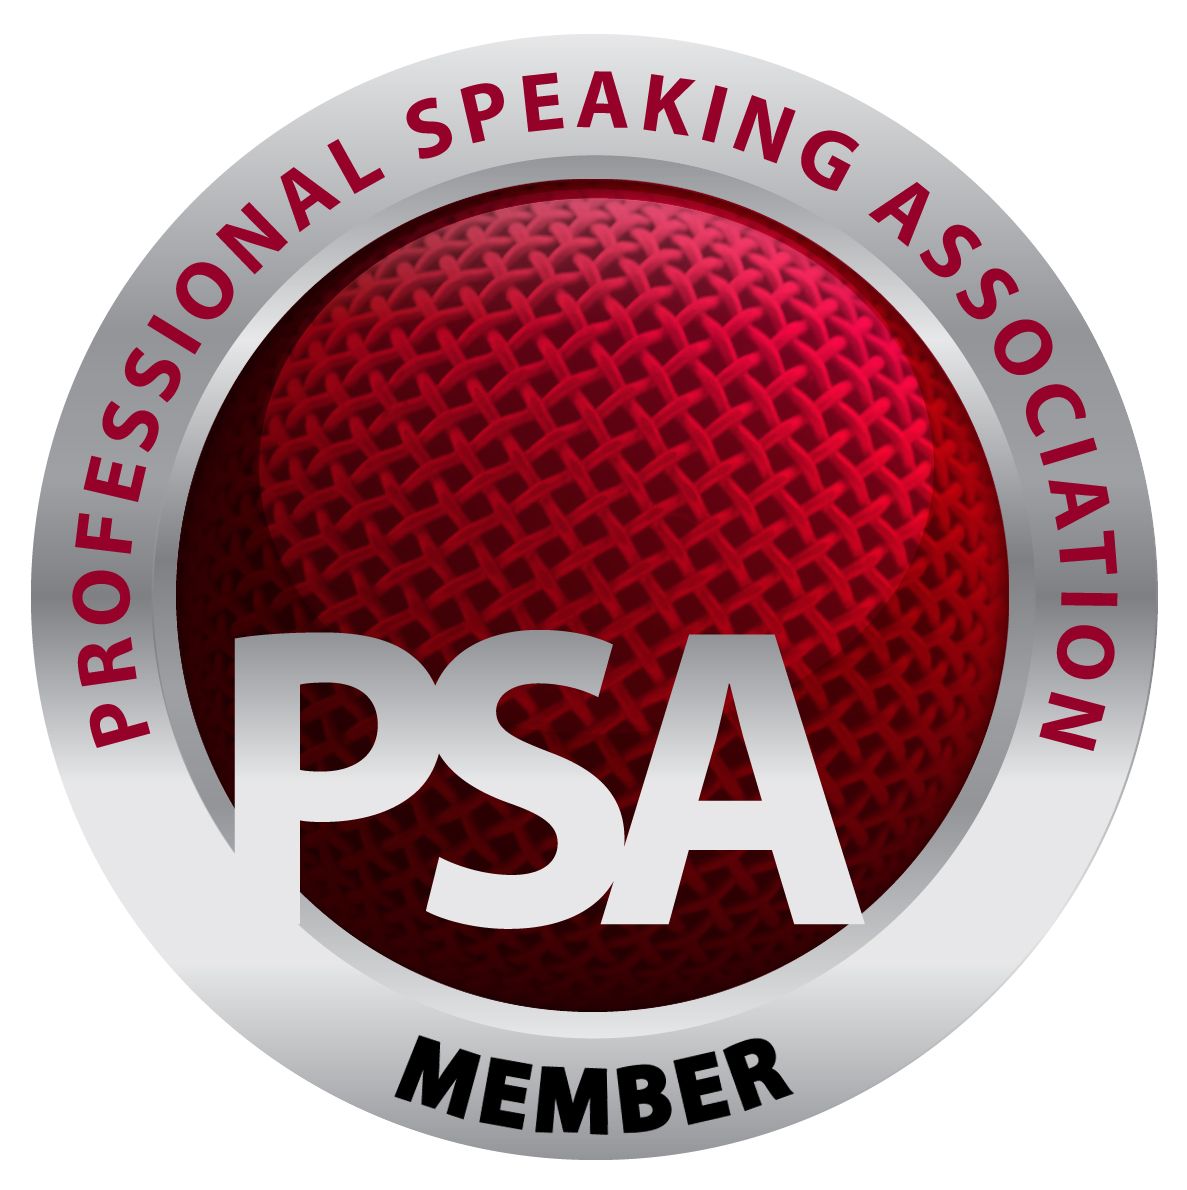 Professional Speaking Association Professional Member